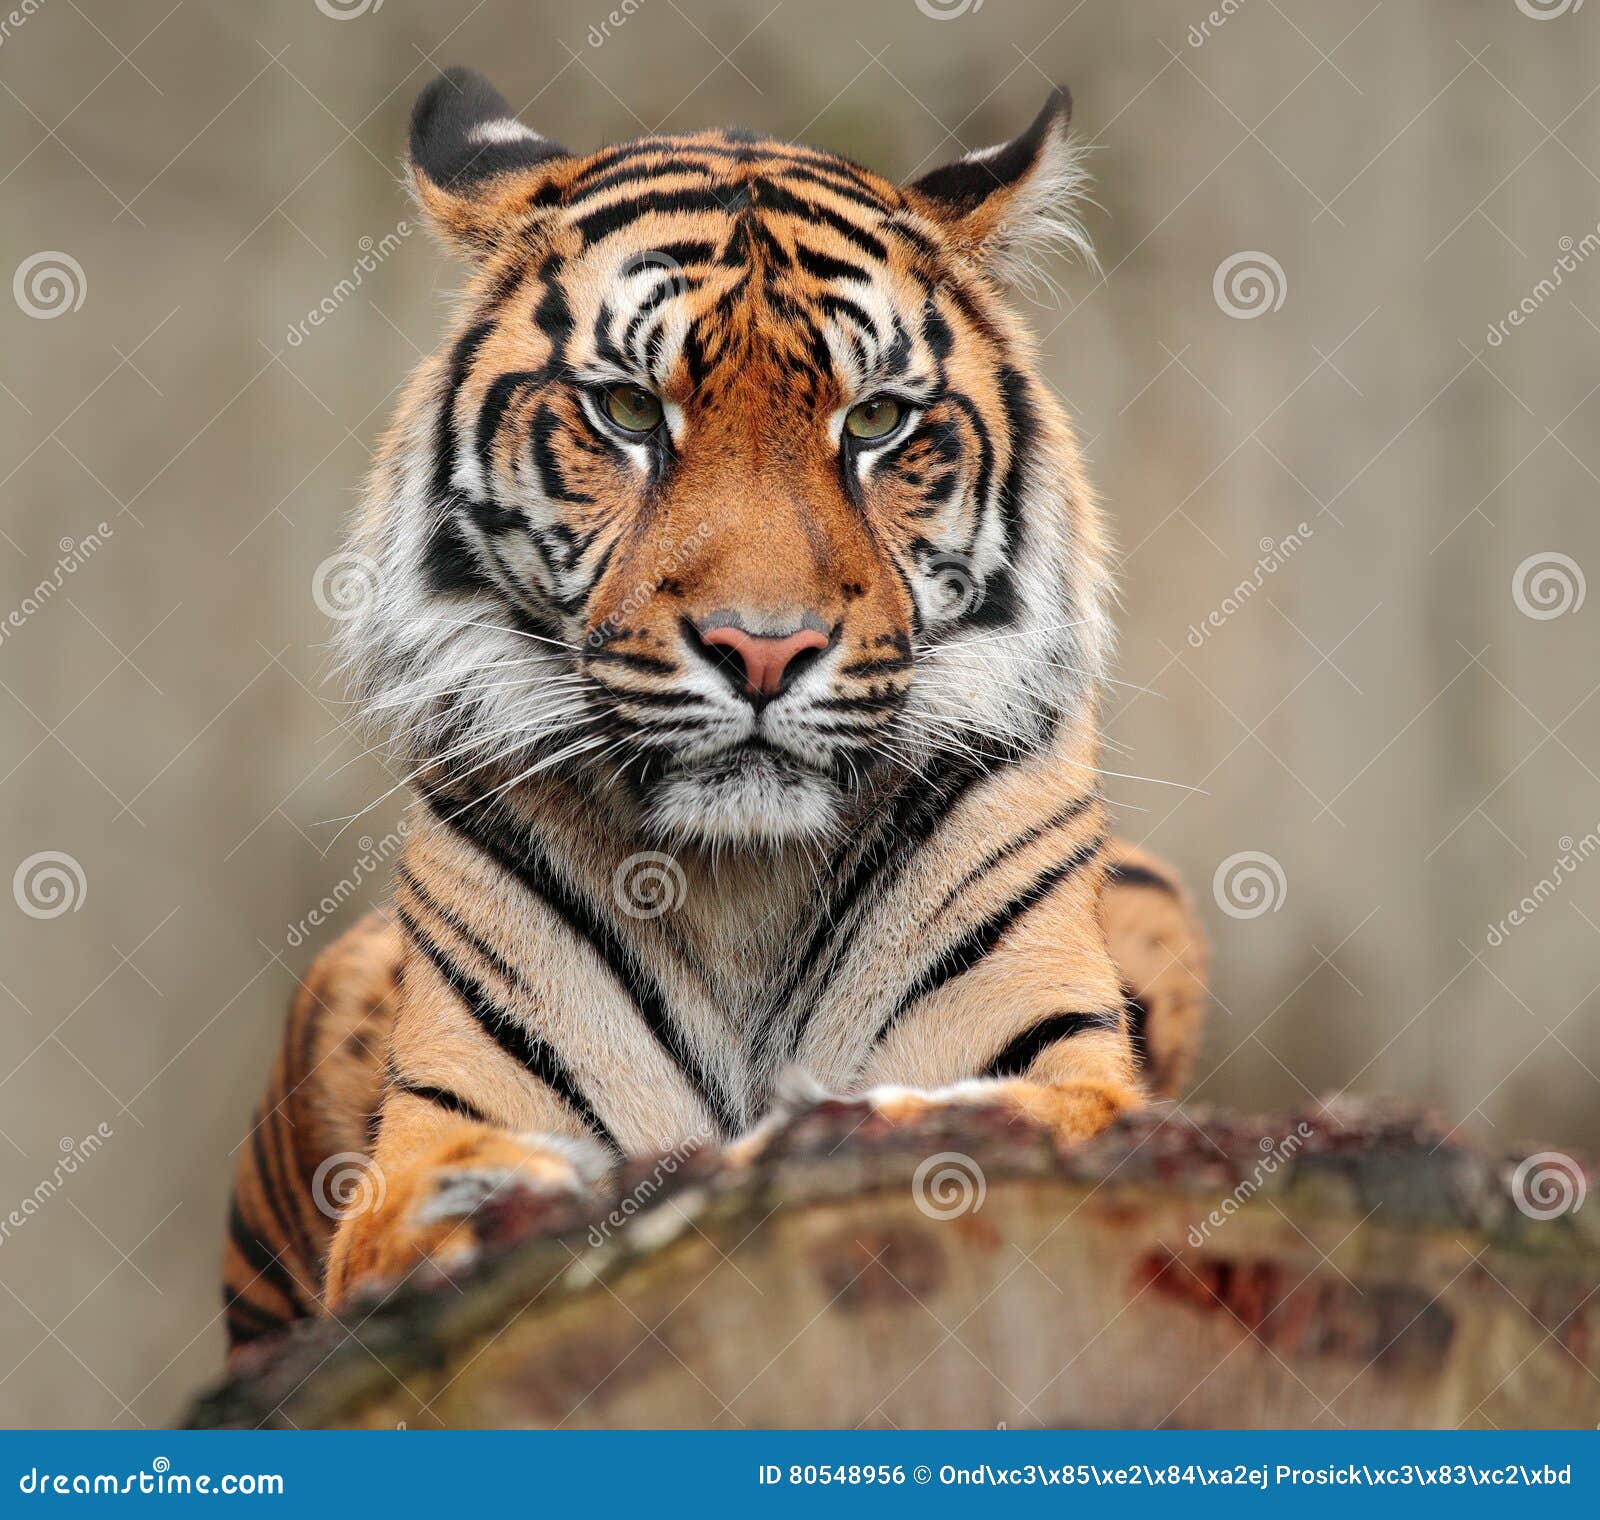 portrait of dangerous animal. sumatran tiger, panthera tigris sumatrae, rare tiger subspecies that inhabits the indonesian island